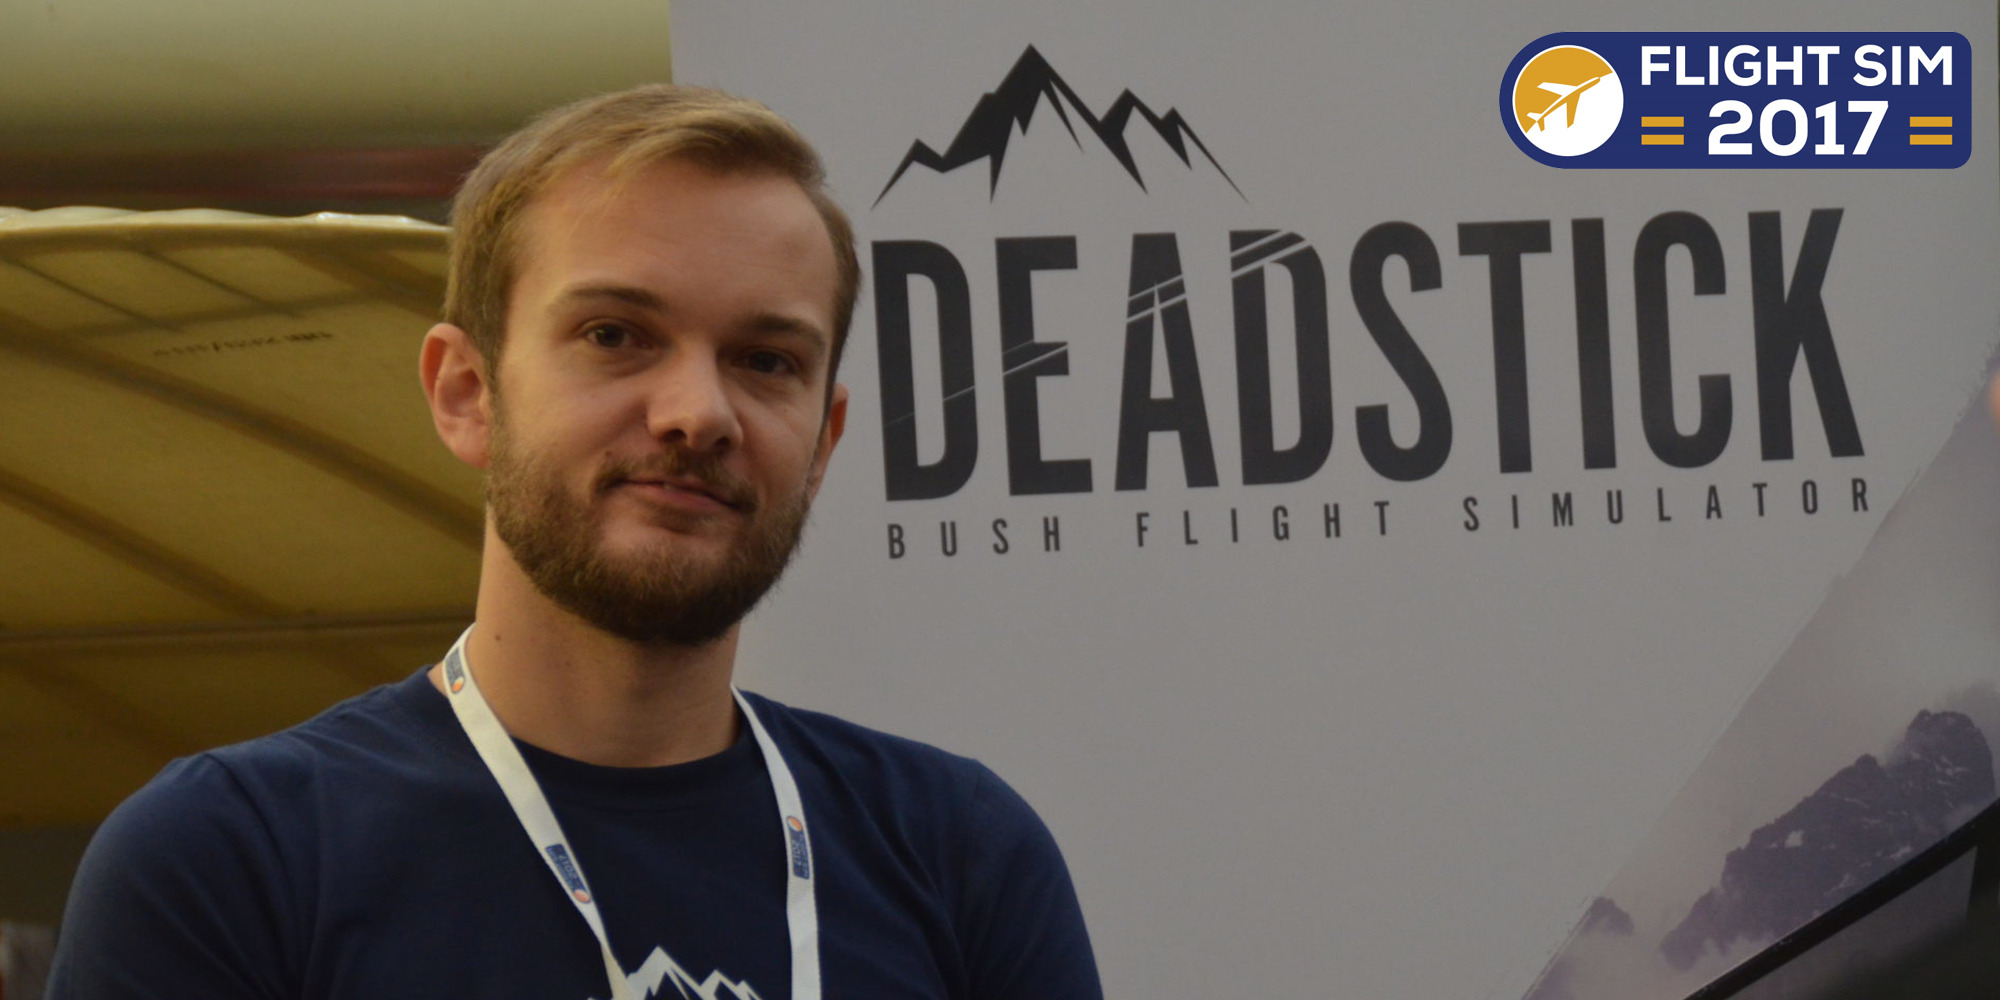 Deadstick Bush Flight Simulator Interview